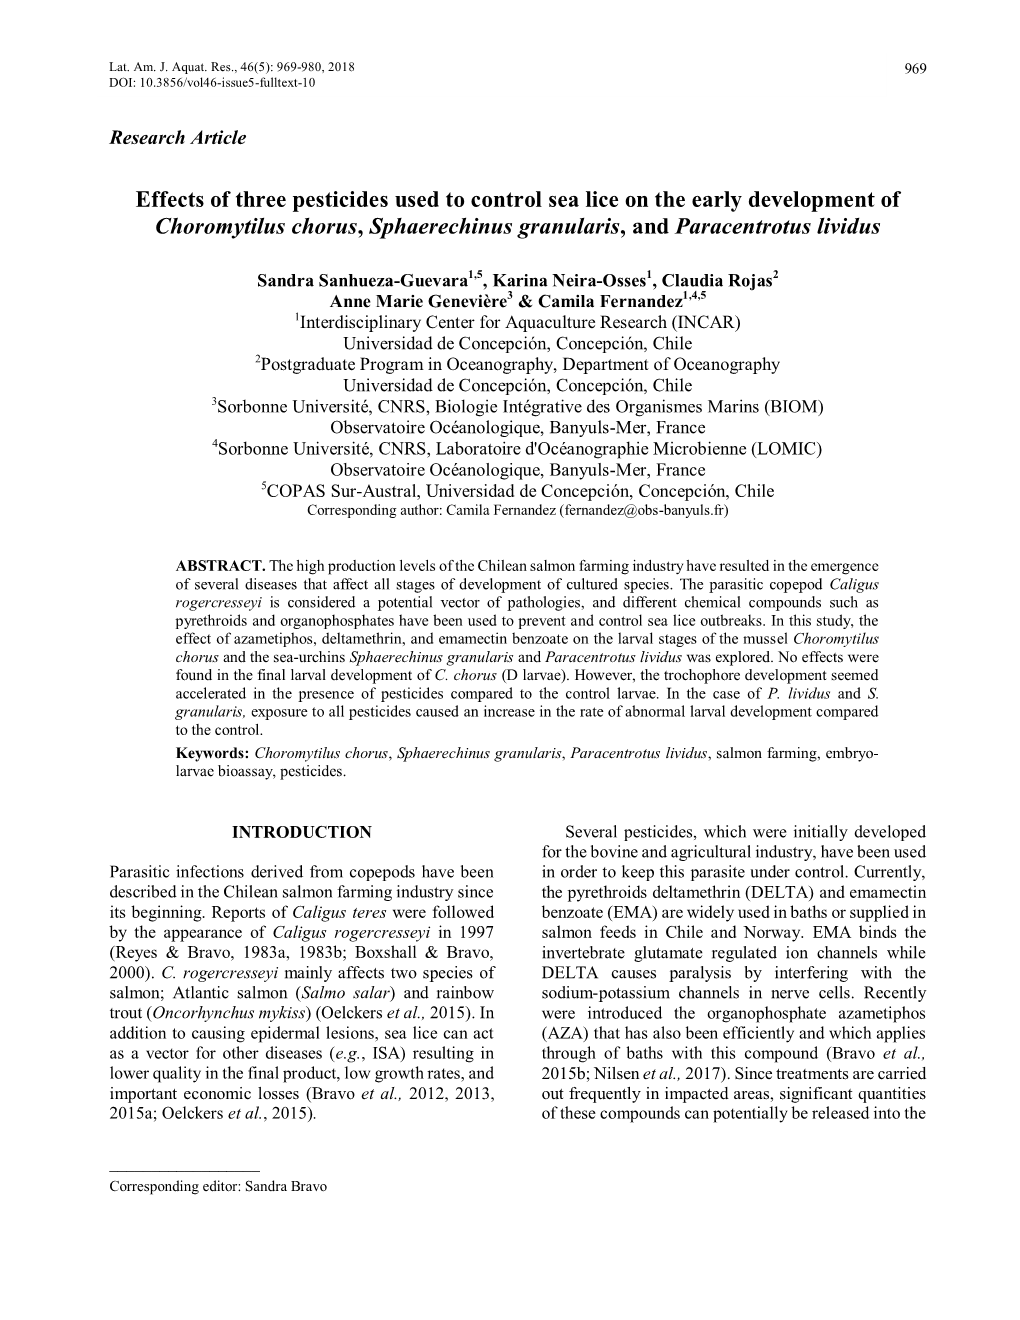 Effects of Three Pesticides Used to Control Sea Lice on the Early Development of Choromytilus Chorus, Sphaerechinus Granularis, and Paracentrotus Lividus